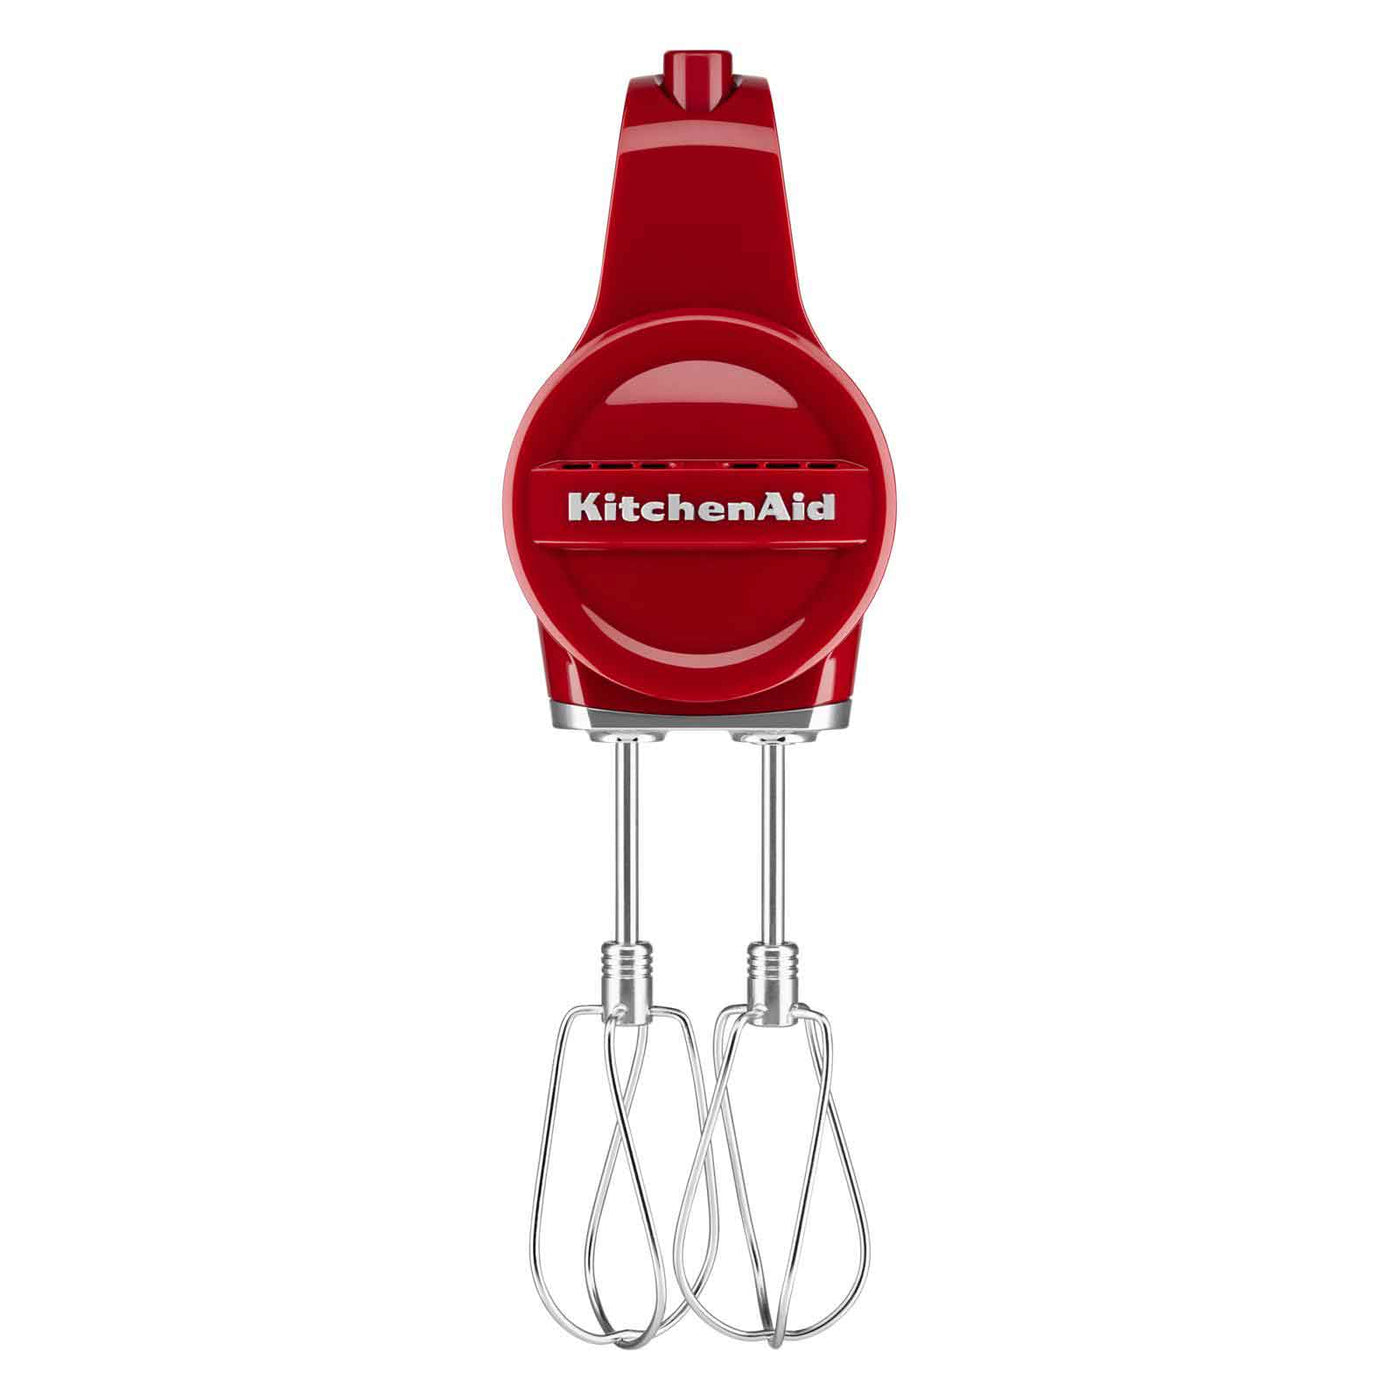 KitchenAid® Empire Red 7 Speed Cordless Hand Mixer - KHMB732ER